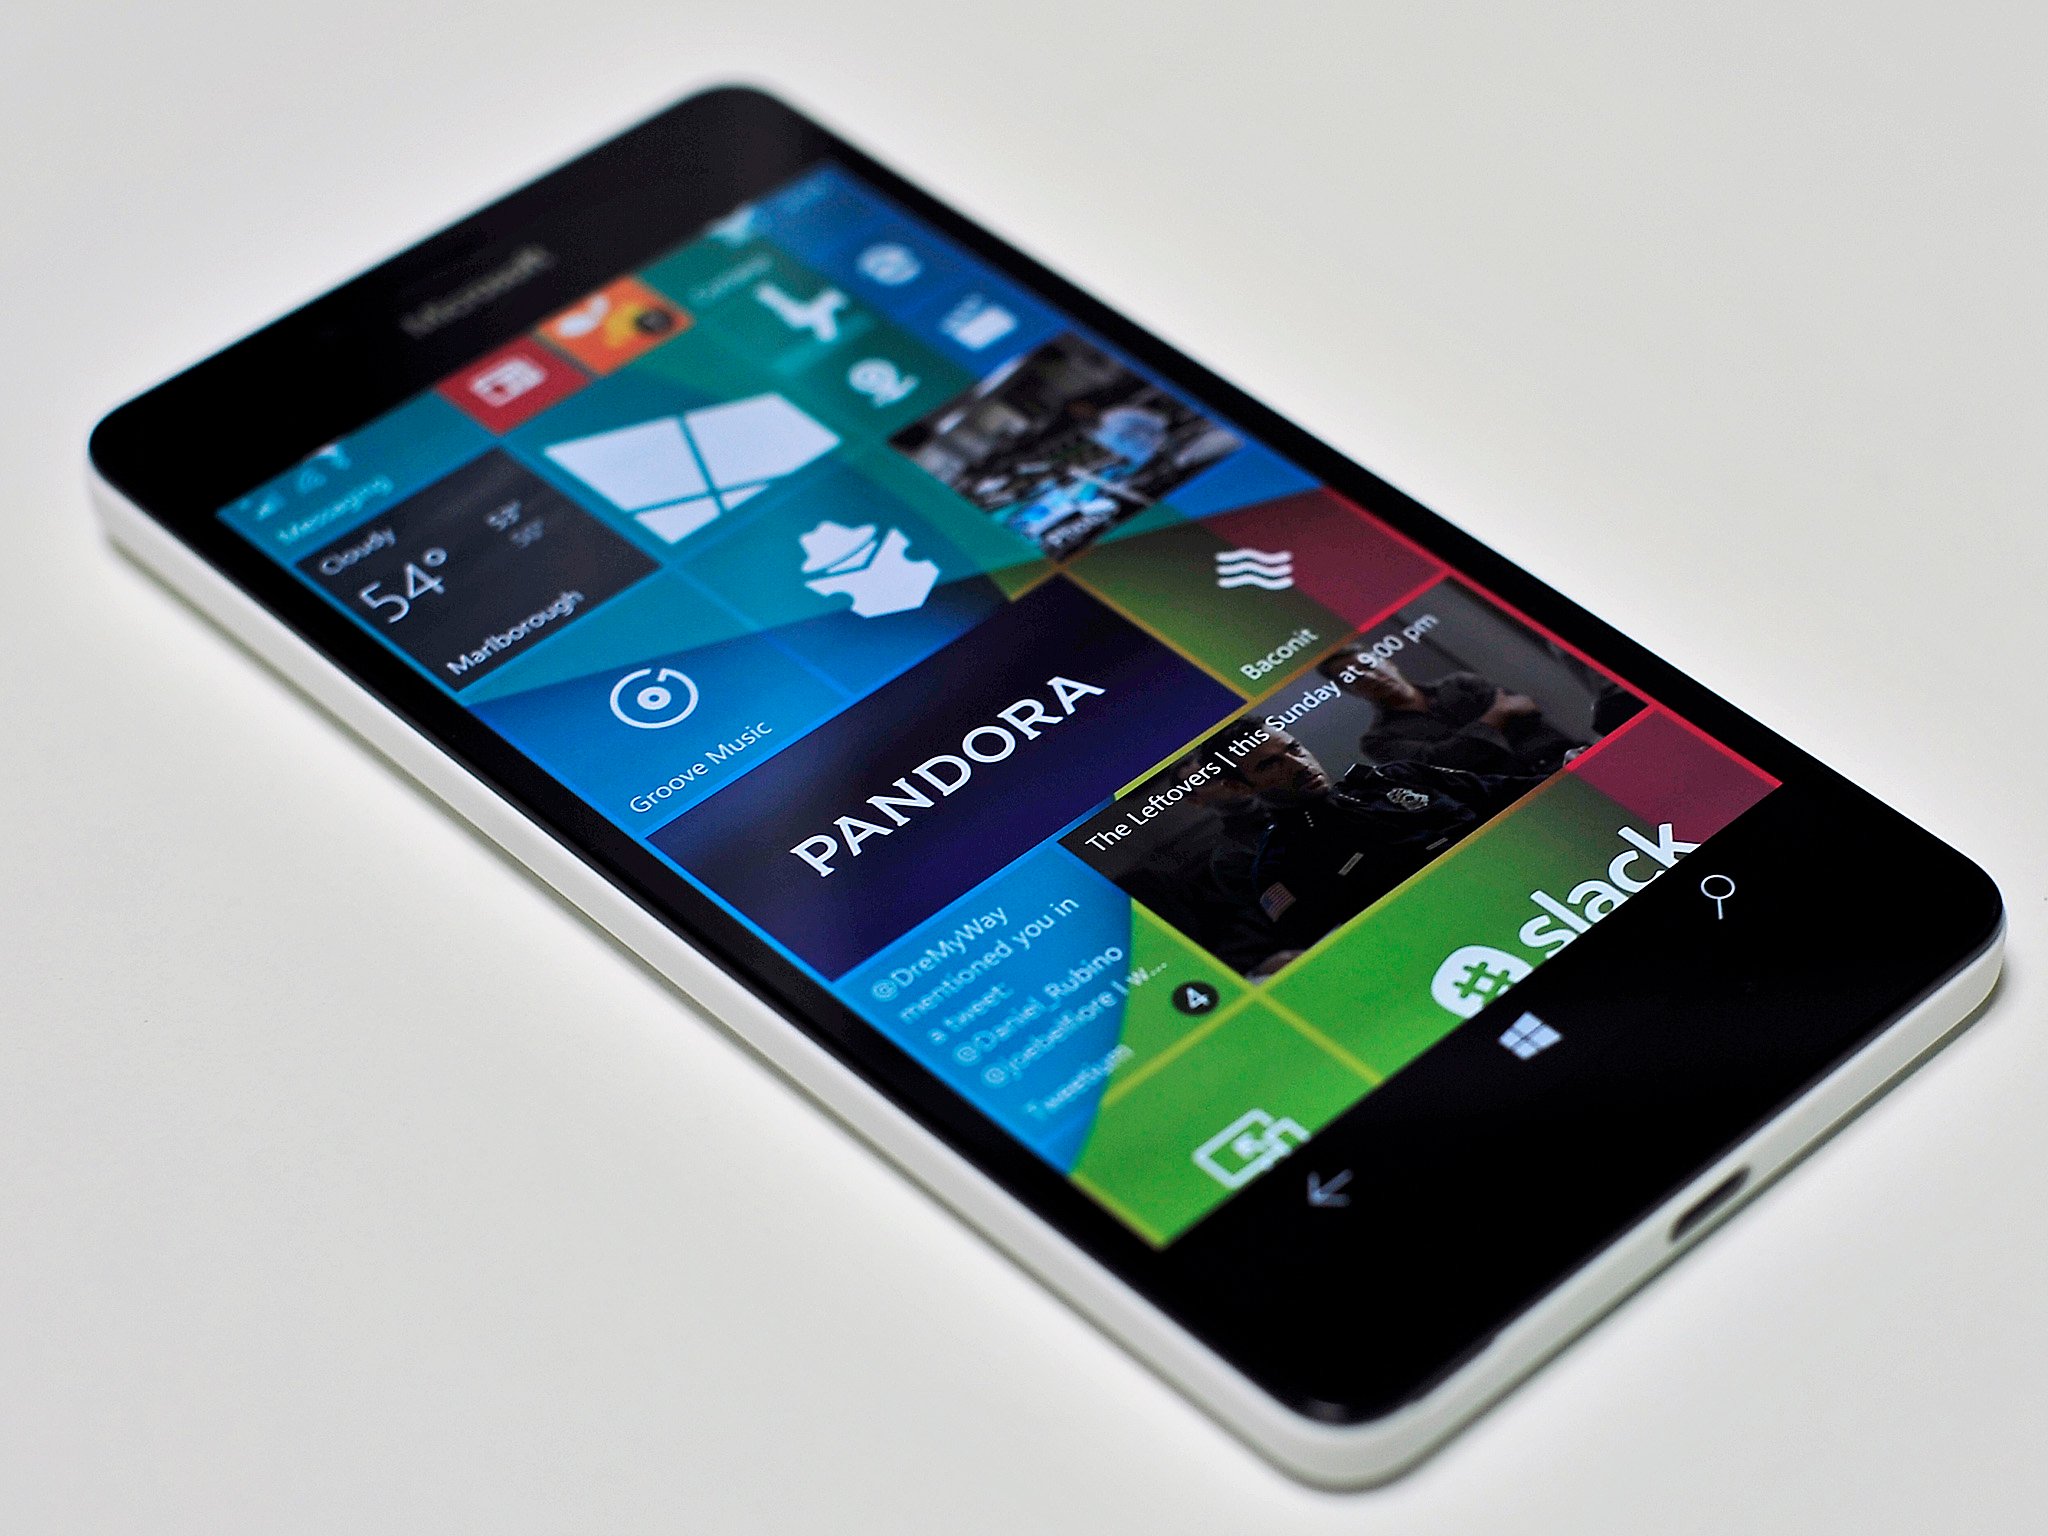 Lumia-950-hero-display-side-startscreen.jpg